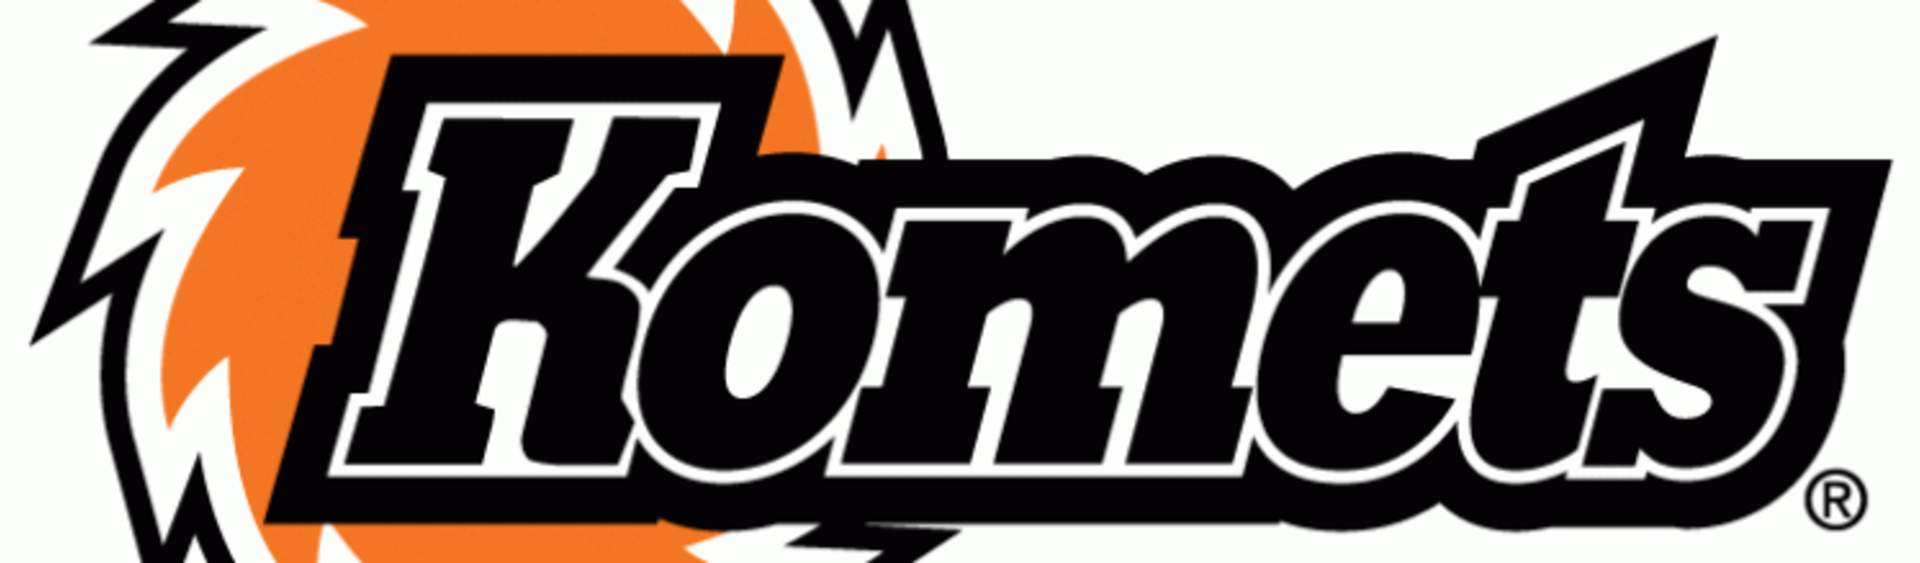 Alternate jersey concept for Fort Wayne Komets of the ECHL : r/hockey